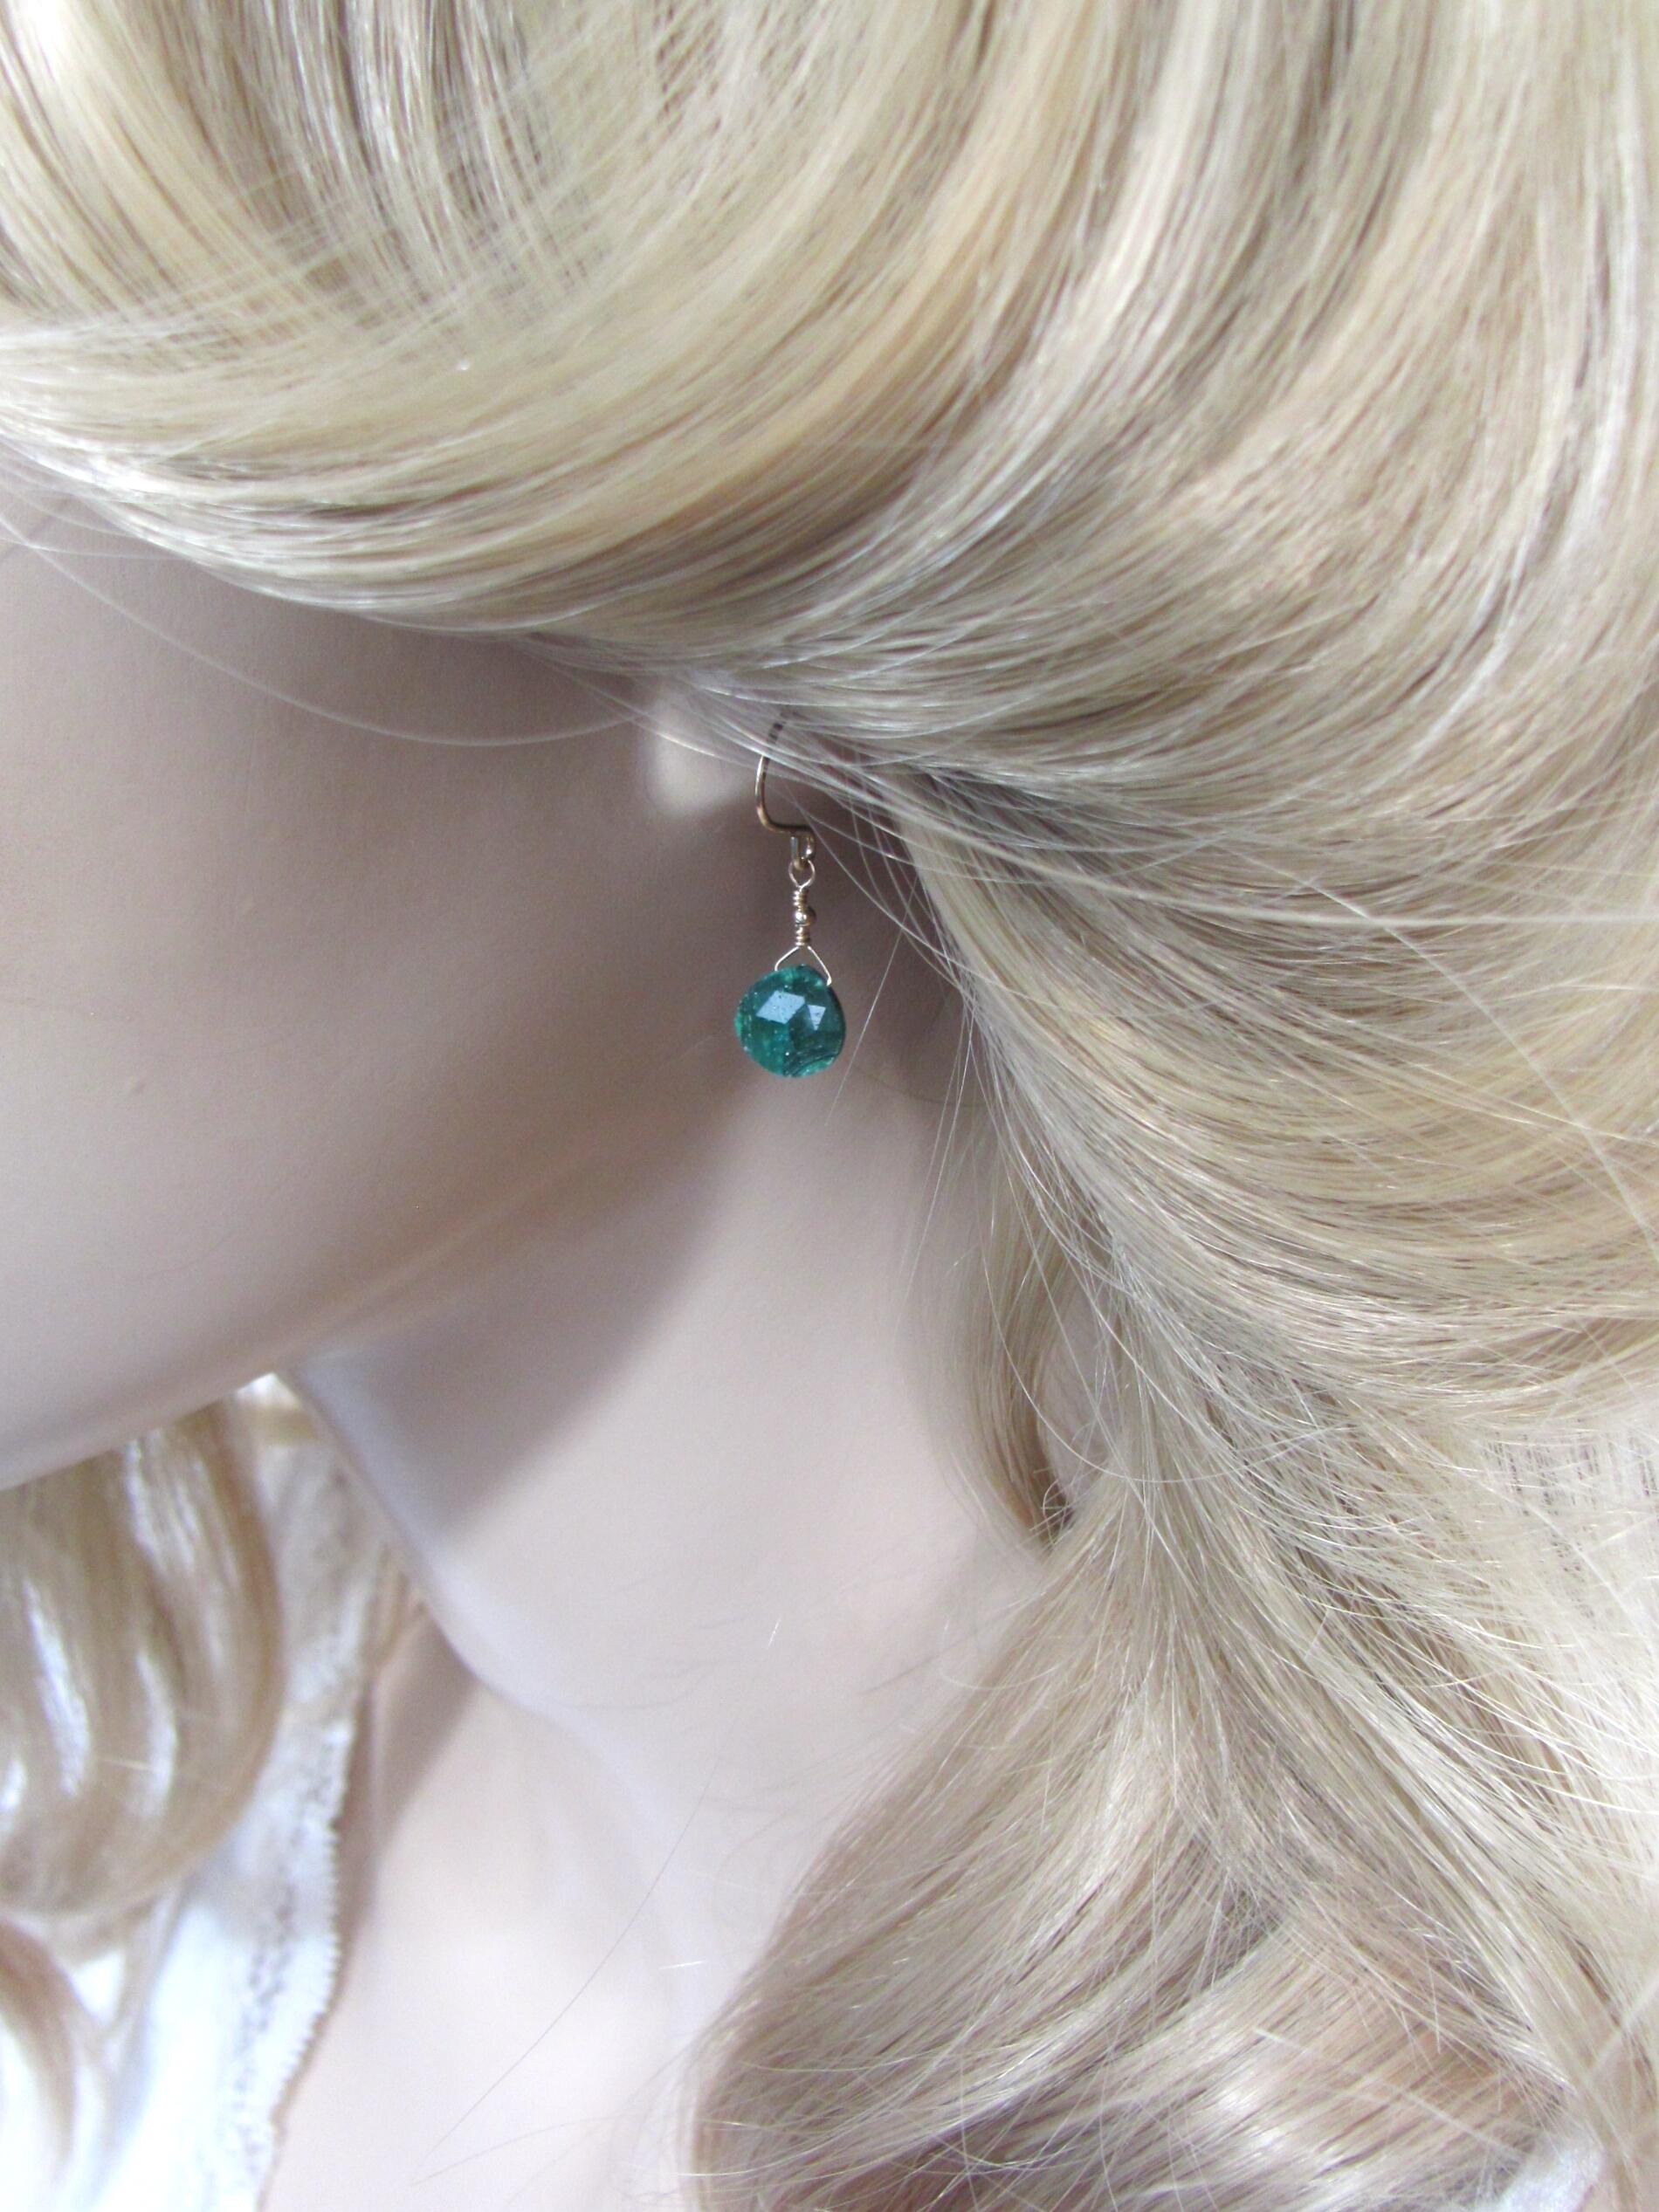 Genuine Emerald Drop Earrings